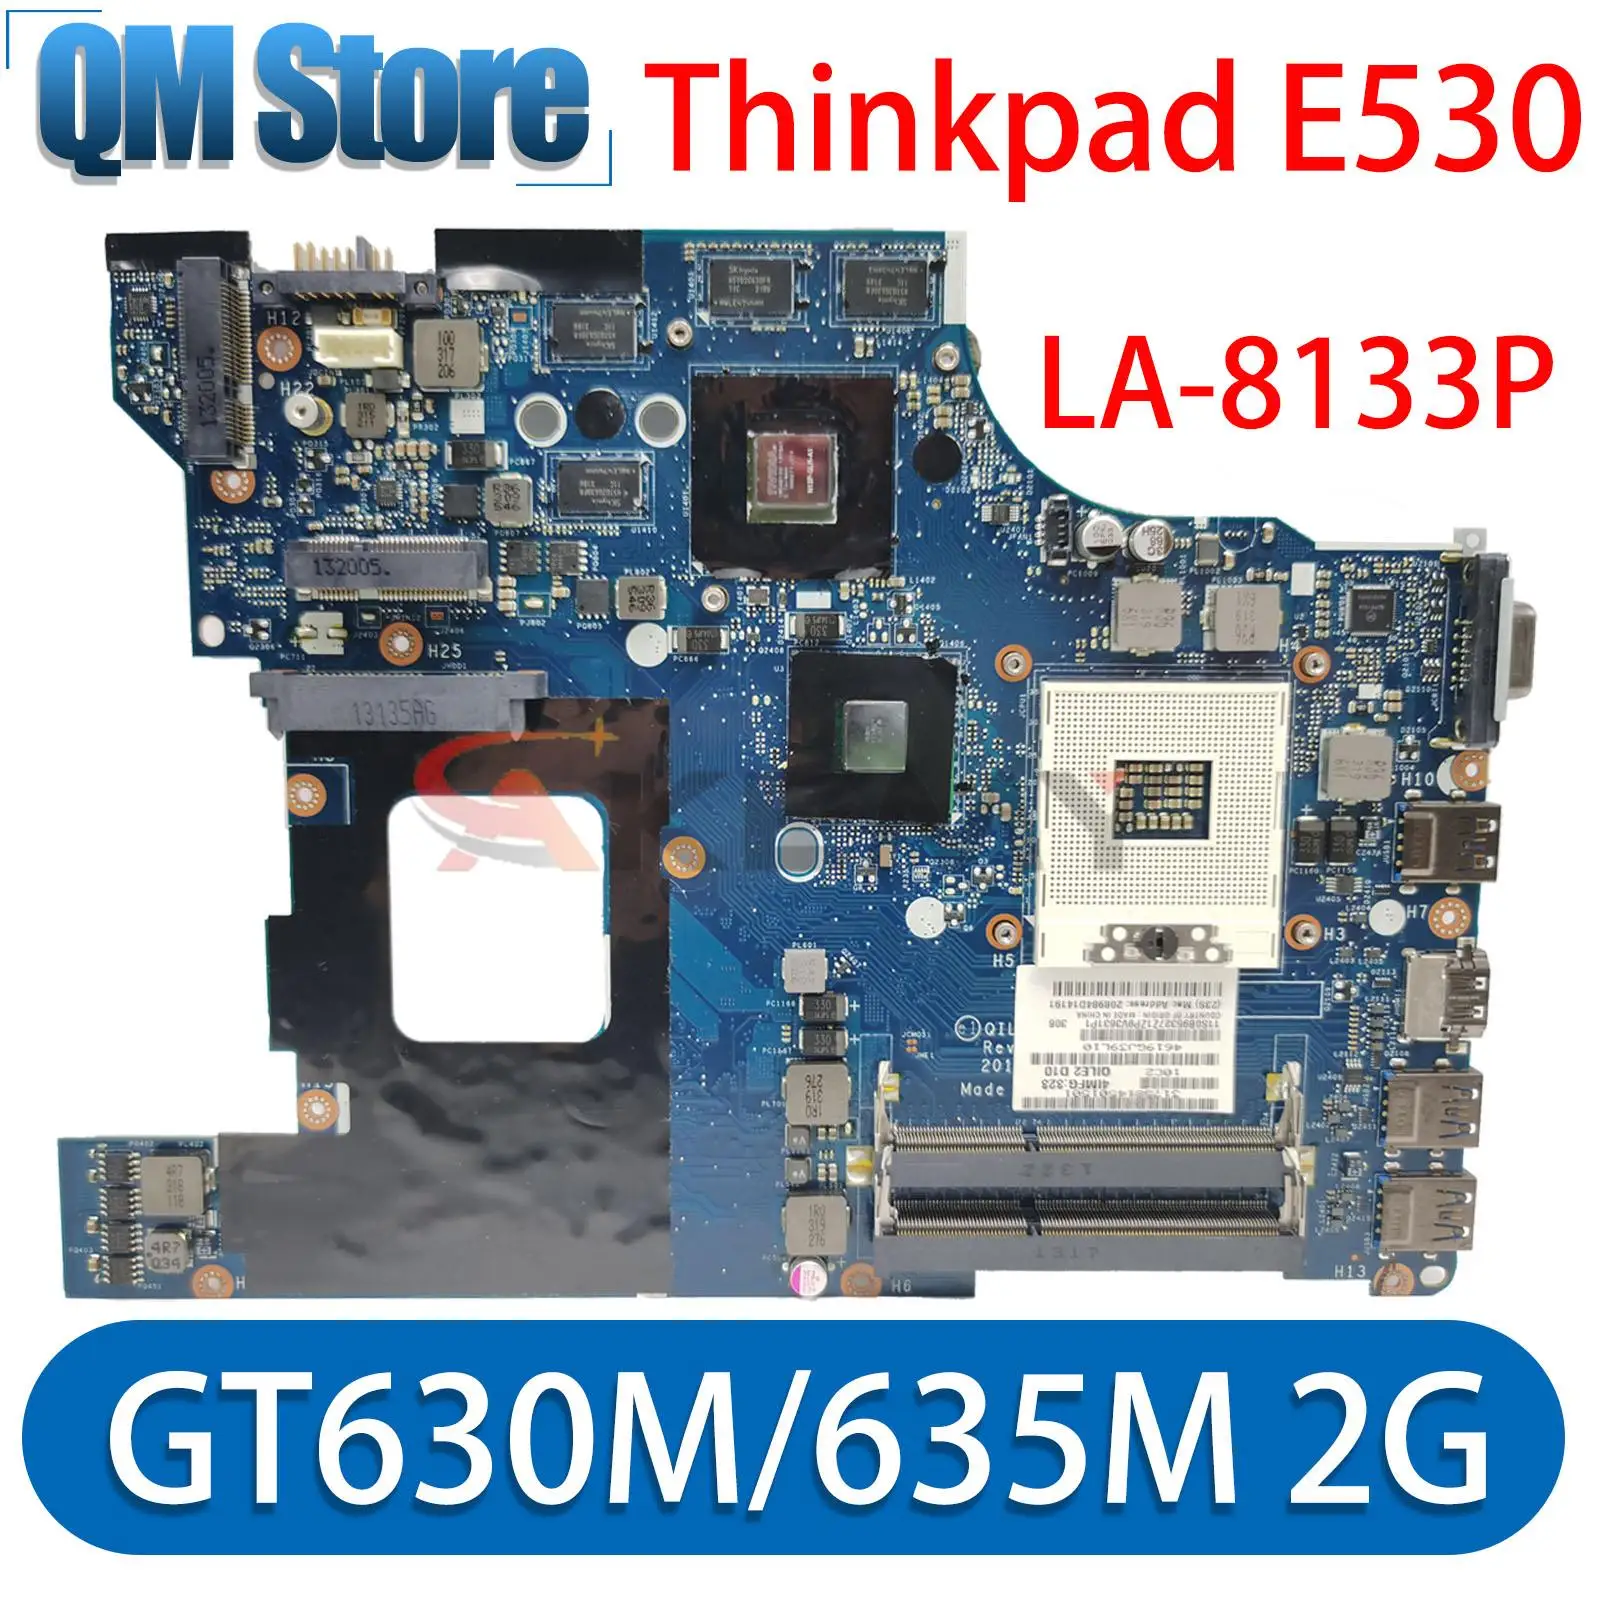 

LA-8133P Mainboard For Lenovo Thinkpad E530 E530C Laptop Motherboard GT630M/635M 2G GPU HM77 DDR3 FRU 04W4016 100% test ok